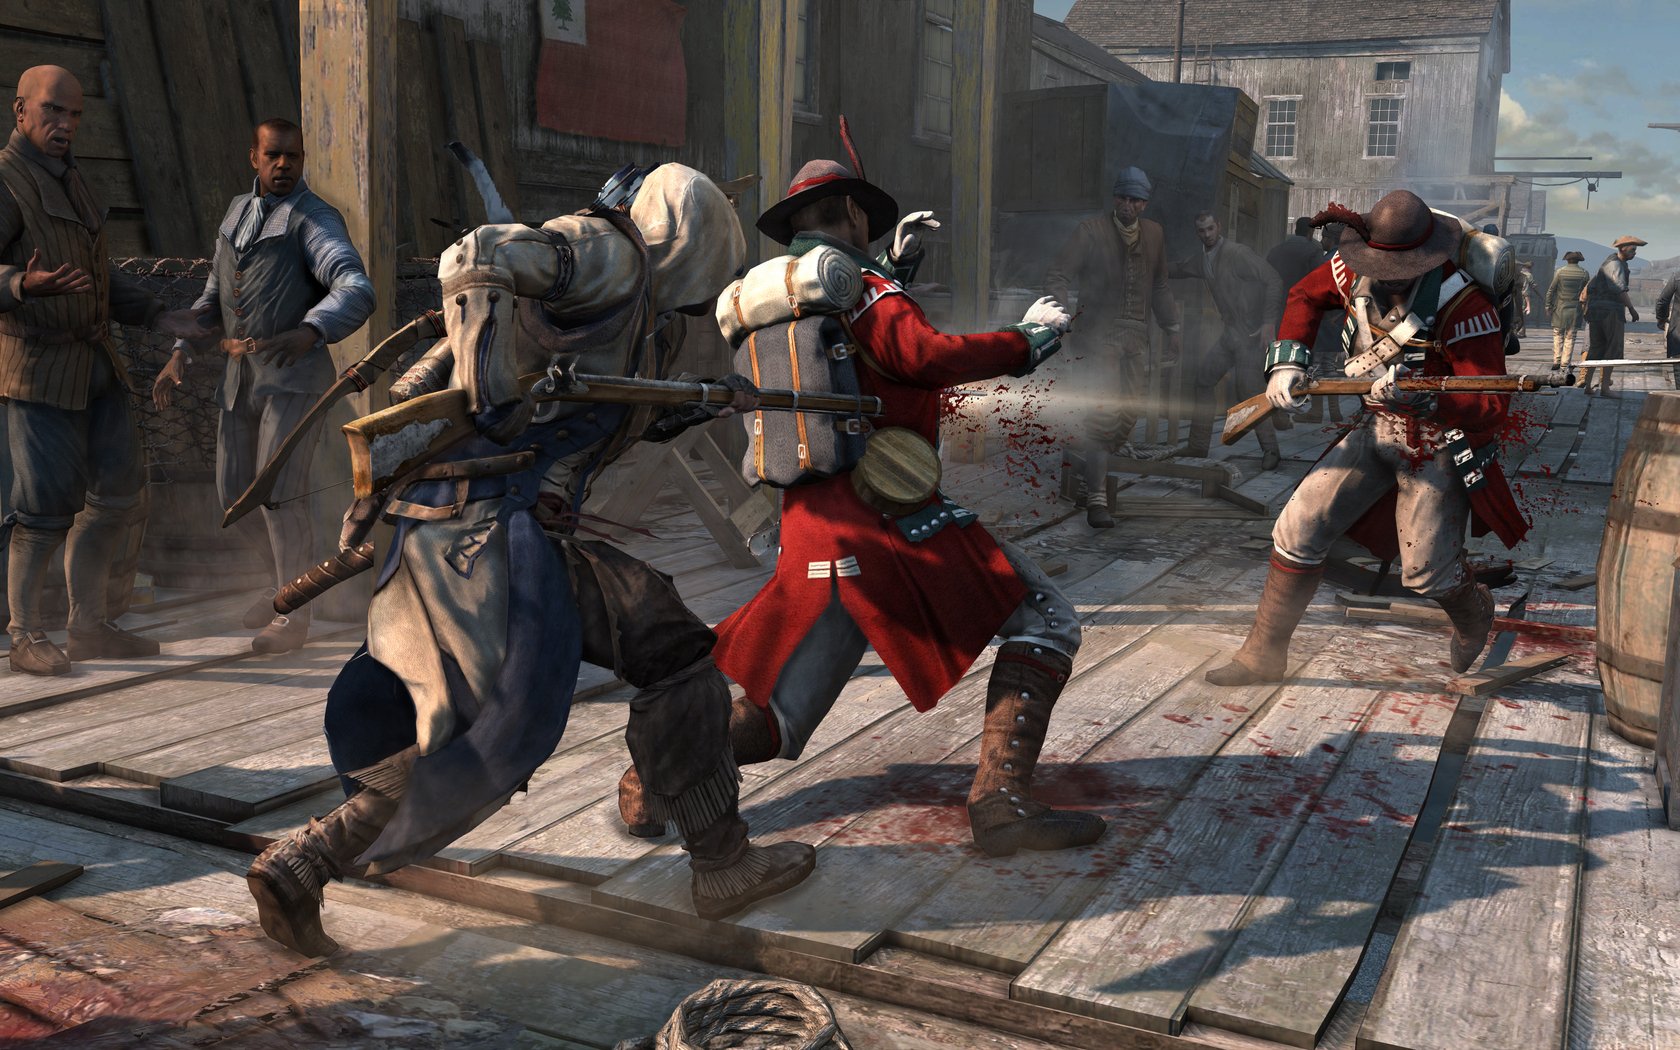 Игры нового века. Ассасин Крид 3. Assassin s Creed игра 3. Assassin’s Creed III – 2012. Игра Assassins Creed 2012.